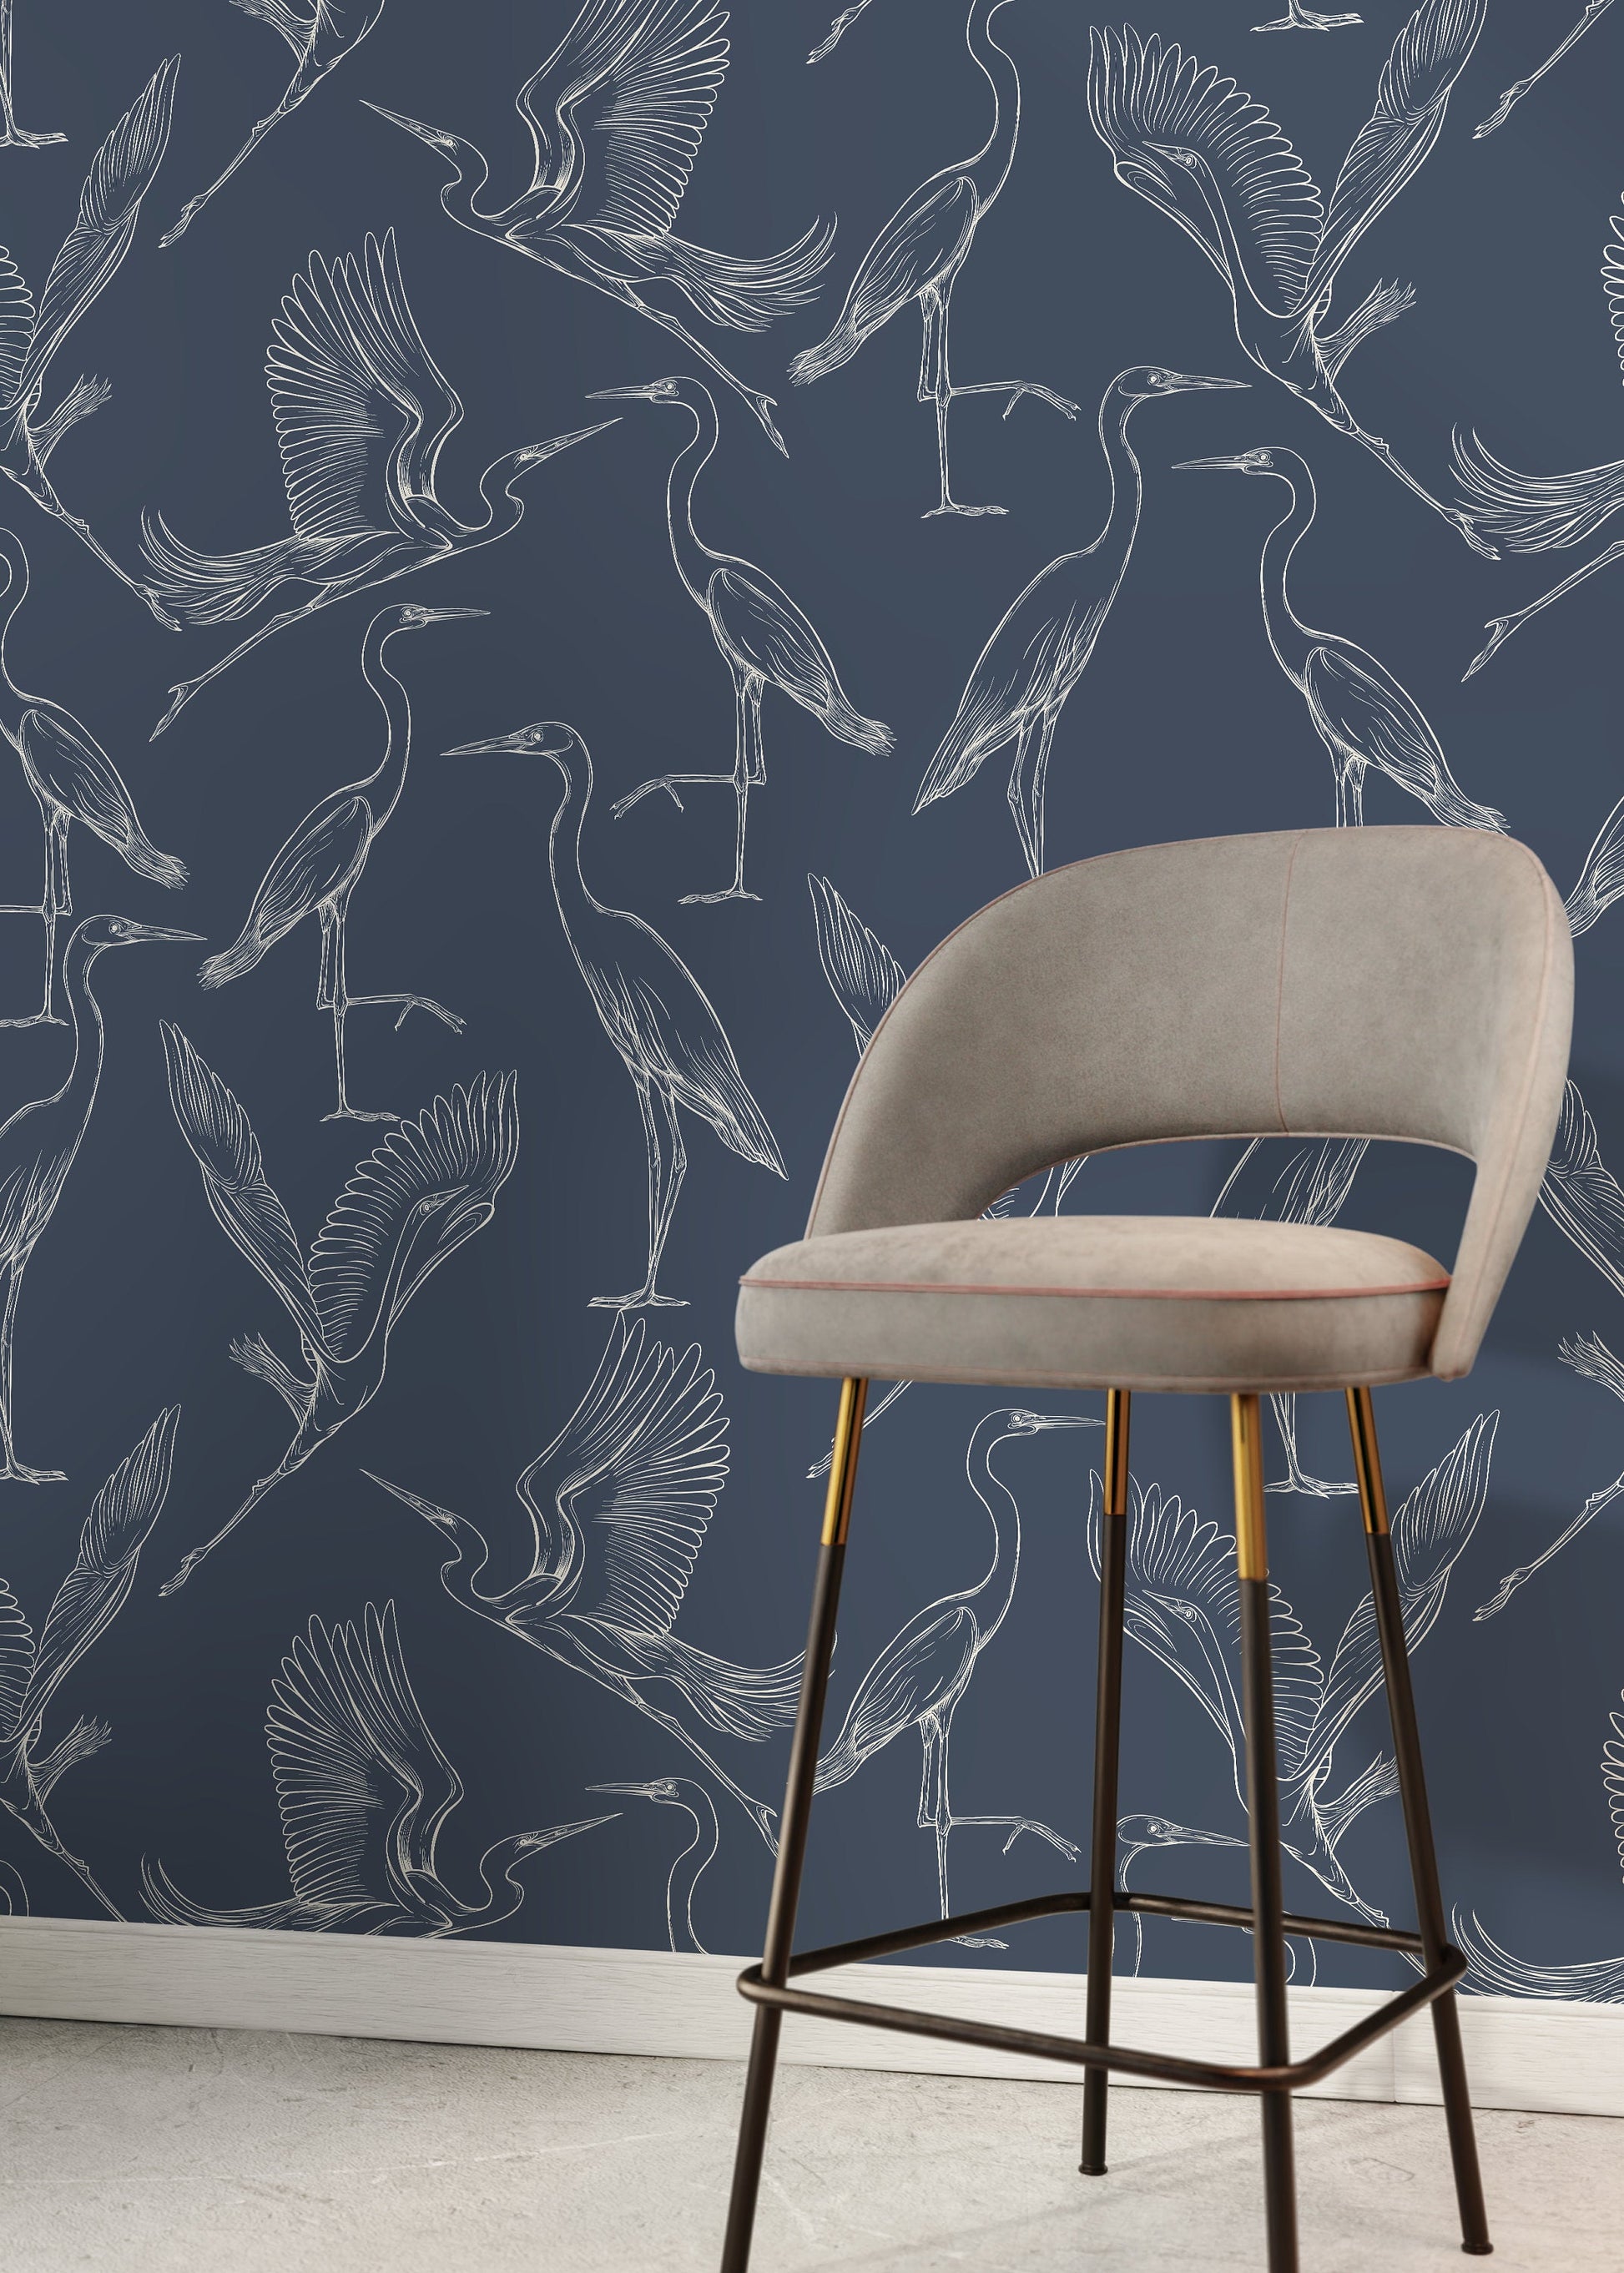 Blue Crane Birds Wallpaper / Peel and Stick Wallpaper Removable Wallpaper Home Decor Wall Art Wall Decor Room Decor - D102